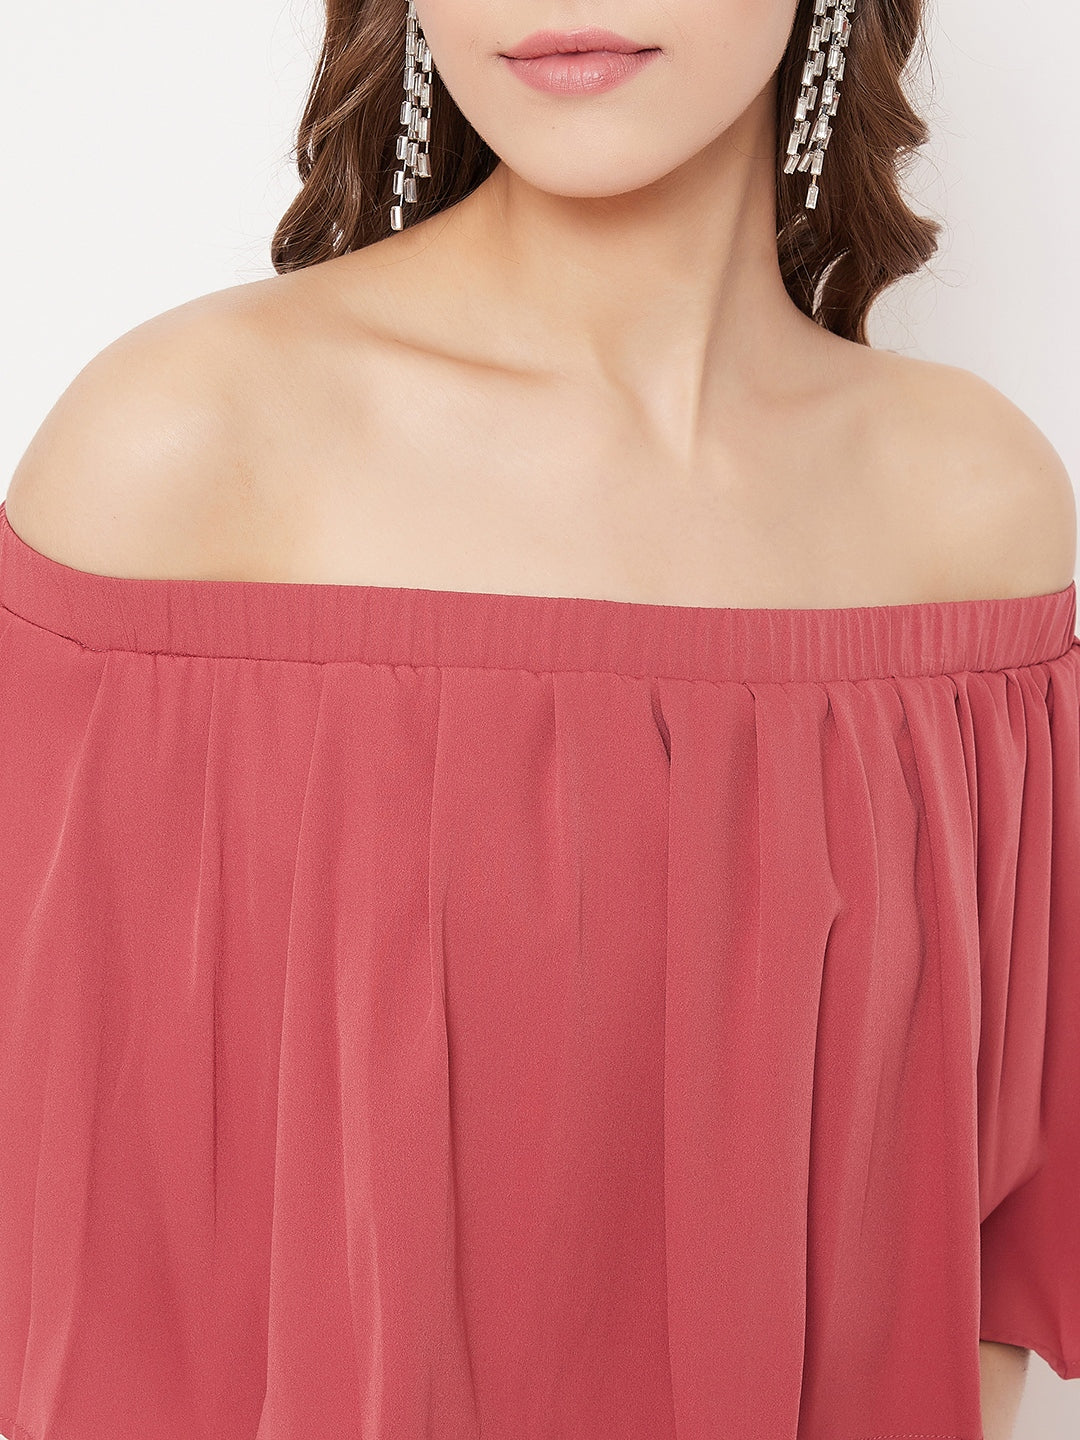 Berrylush Women Solid Dark Pink Off-Shoulder Neck Three-Quarter Sleeves Crepe Flared Maxi Dress